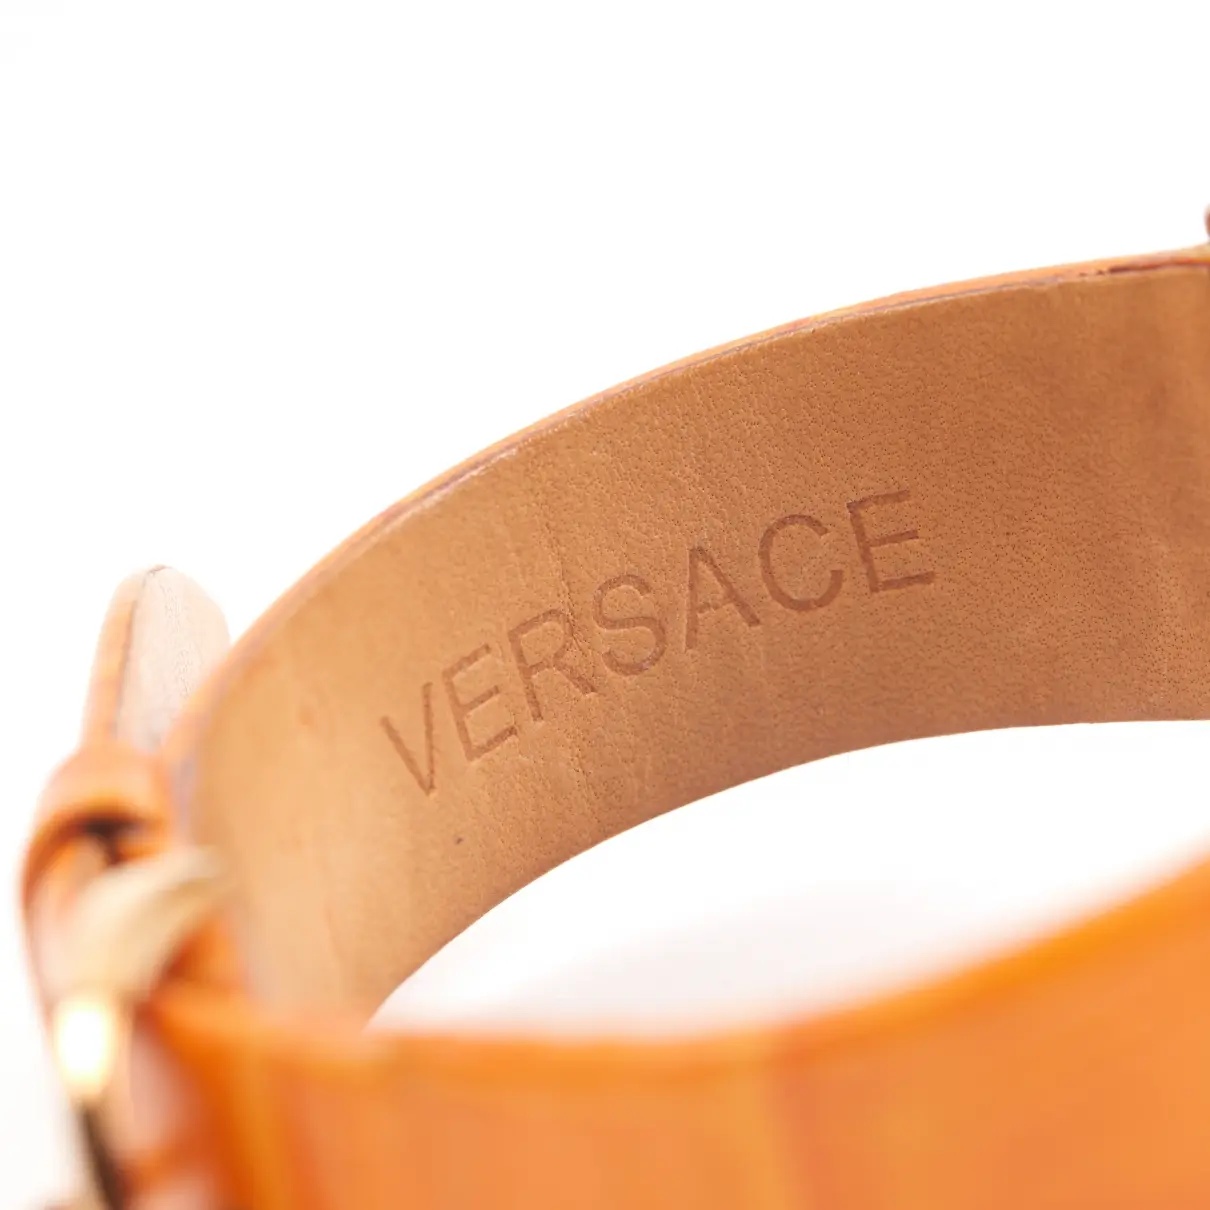 Watch Versace